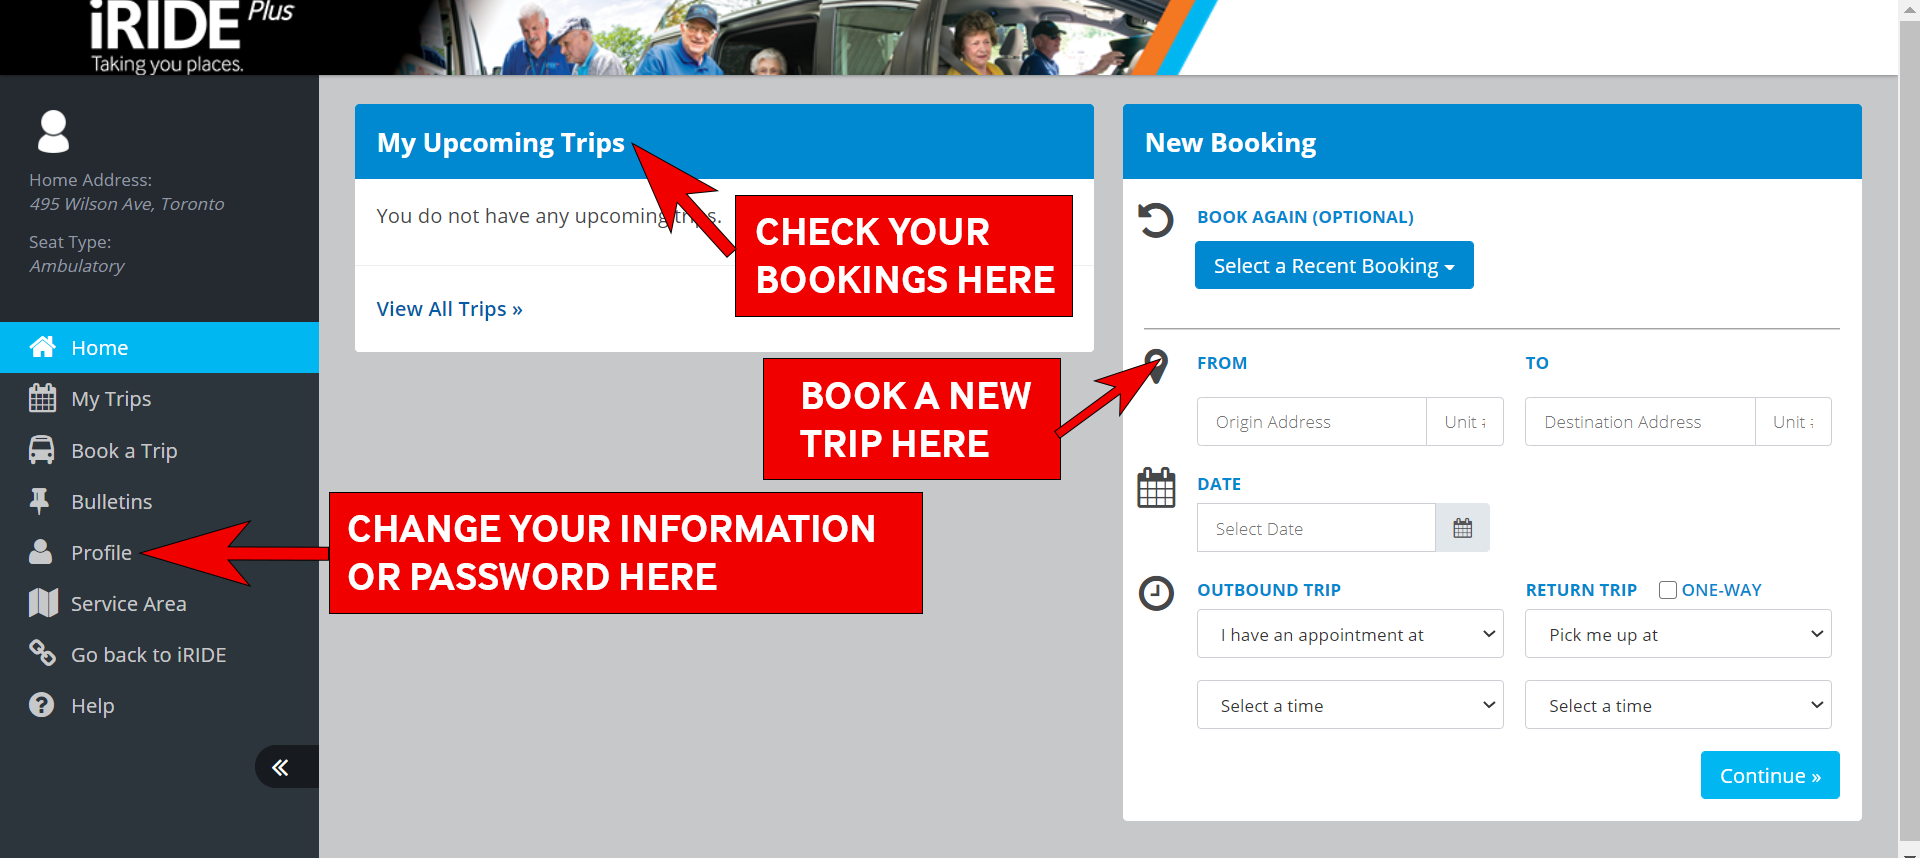 Passenger Portal home page